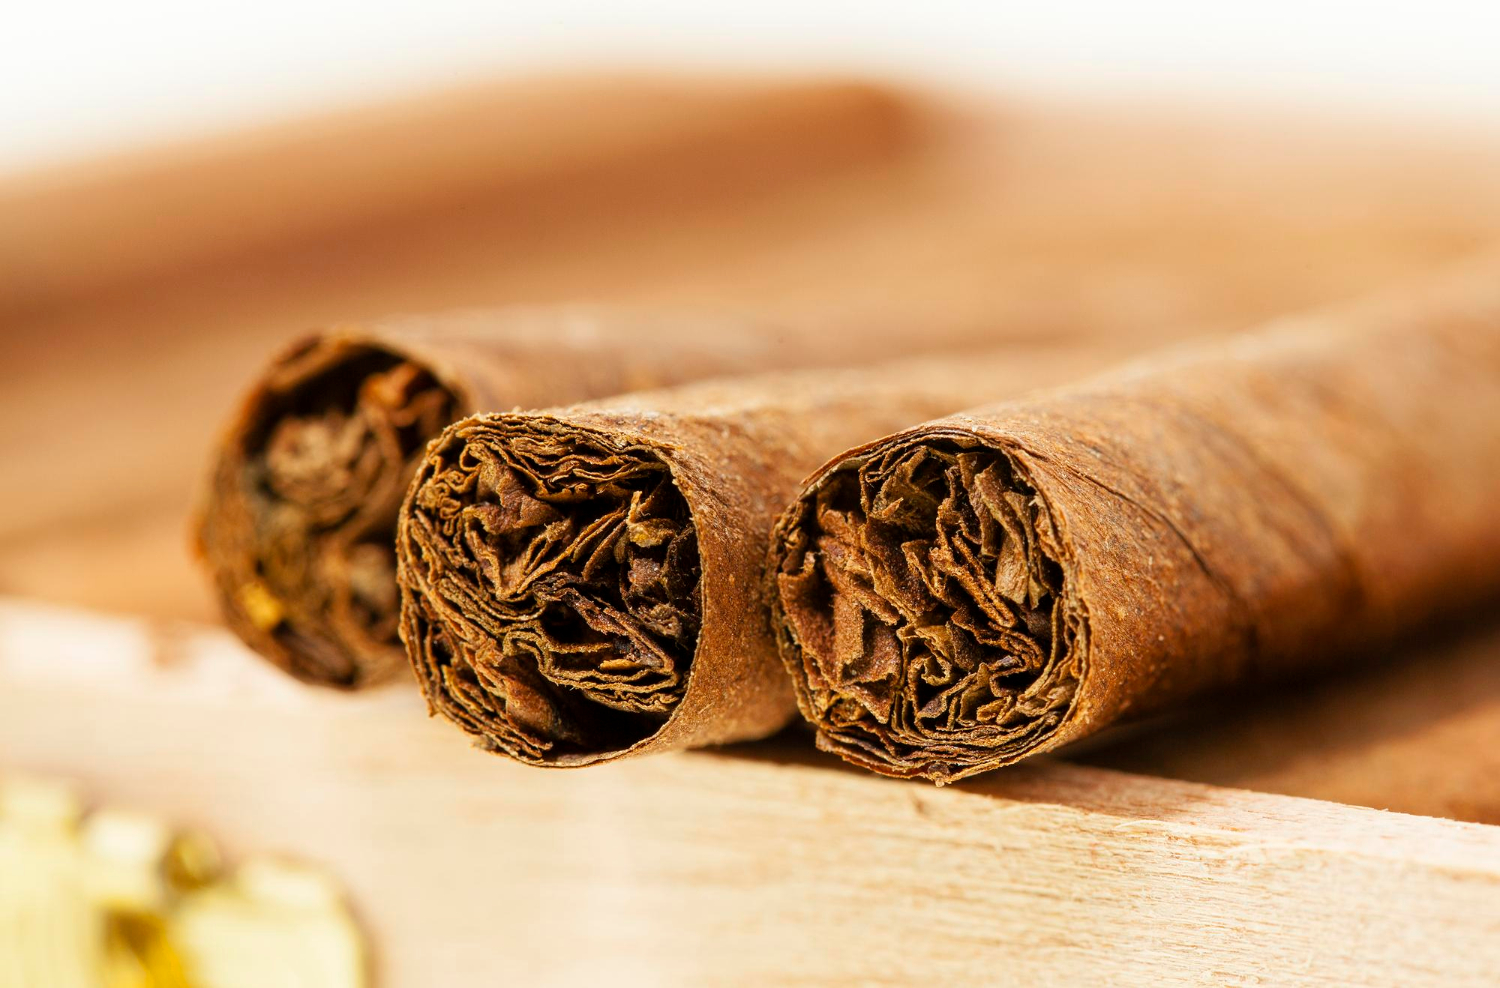 Machine-made cigars cause bad breath